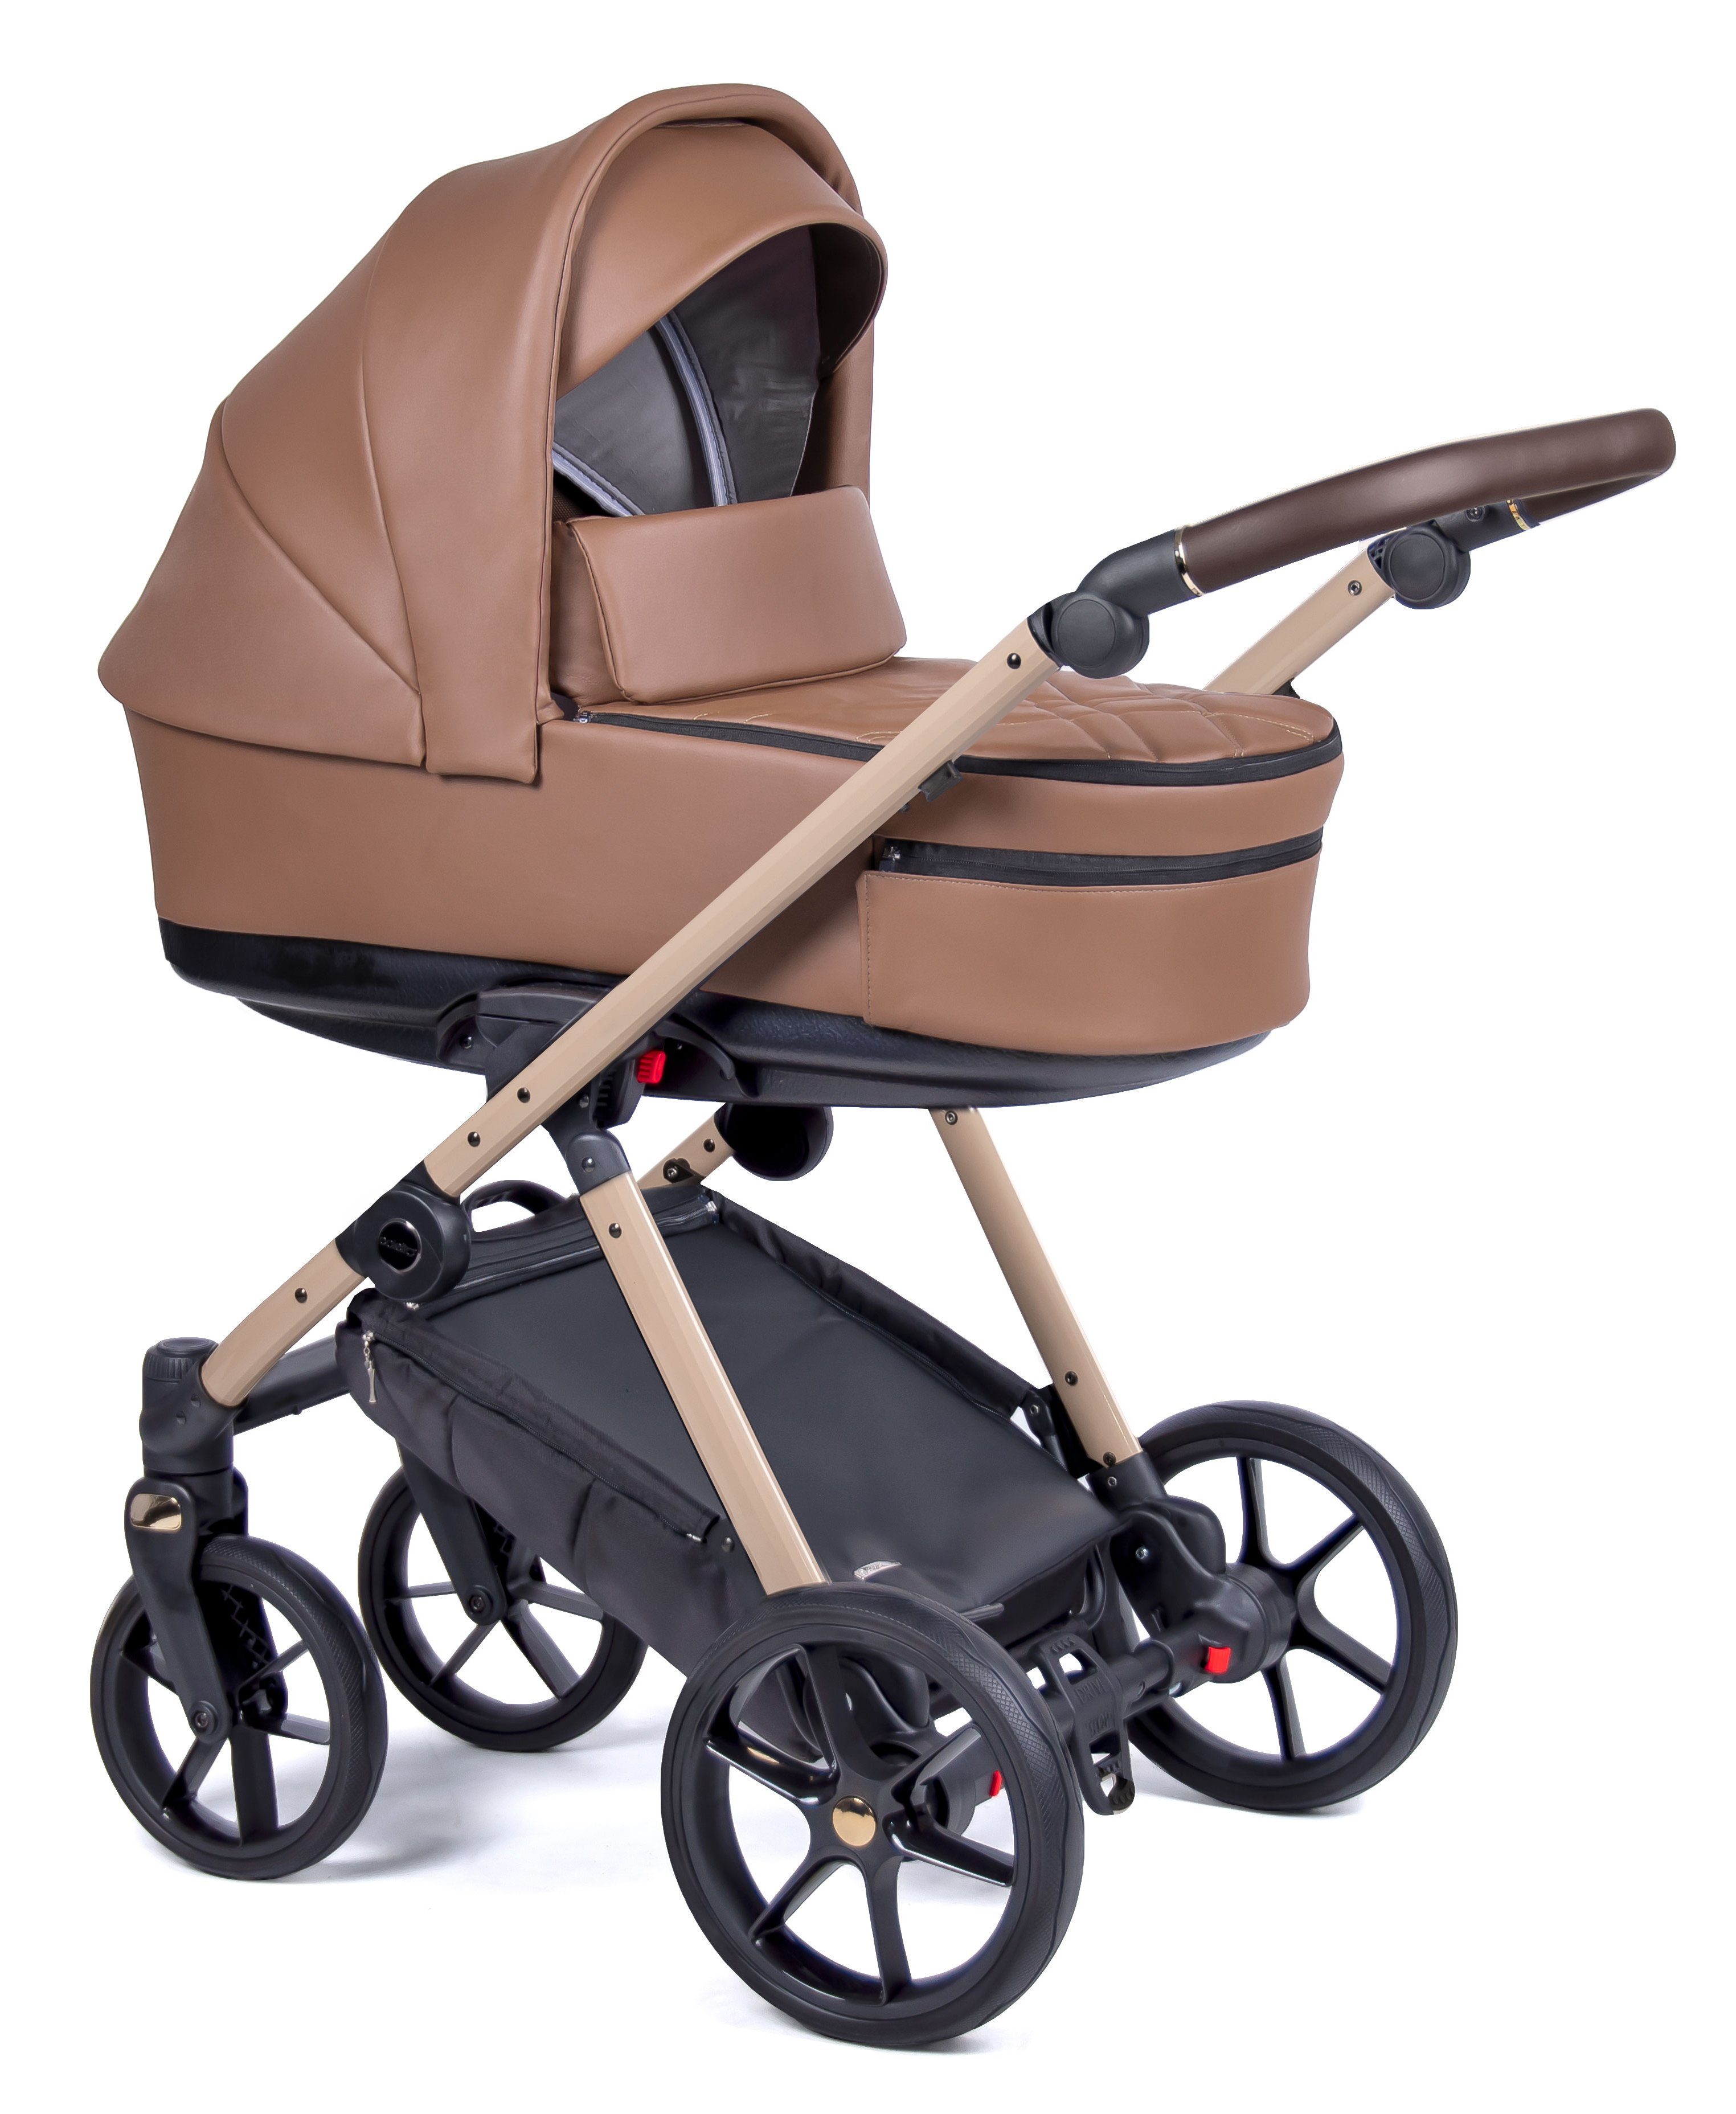 babies-on-wheels Kombi-Kinderwagen 2 in 12 - - = Kinderwagen-Set 14 1 in Braun Premium beige Teile Axxis Designs Gestell